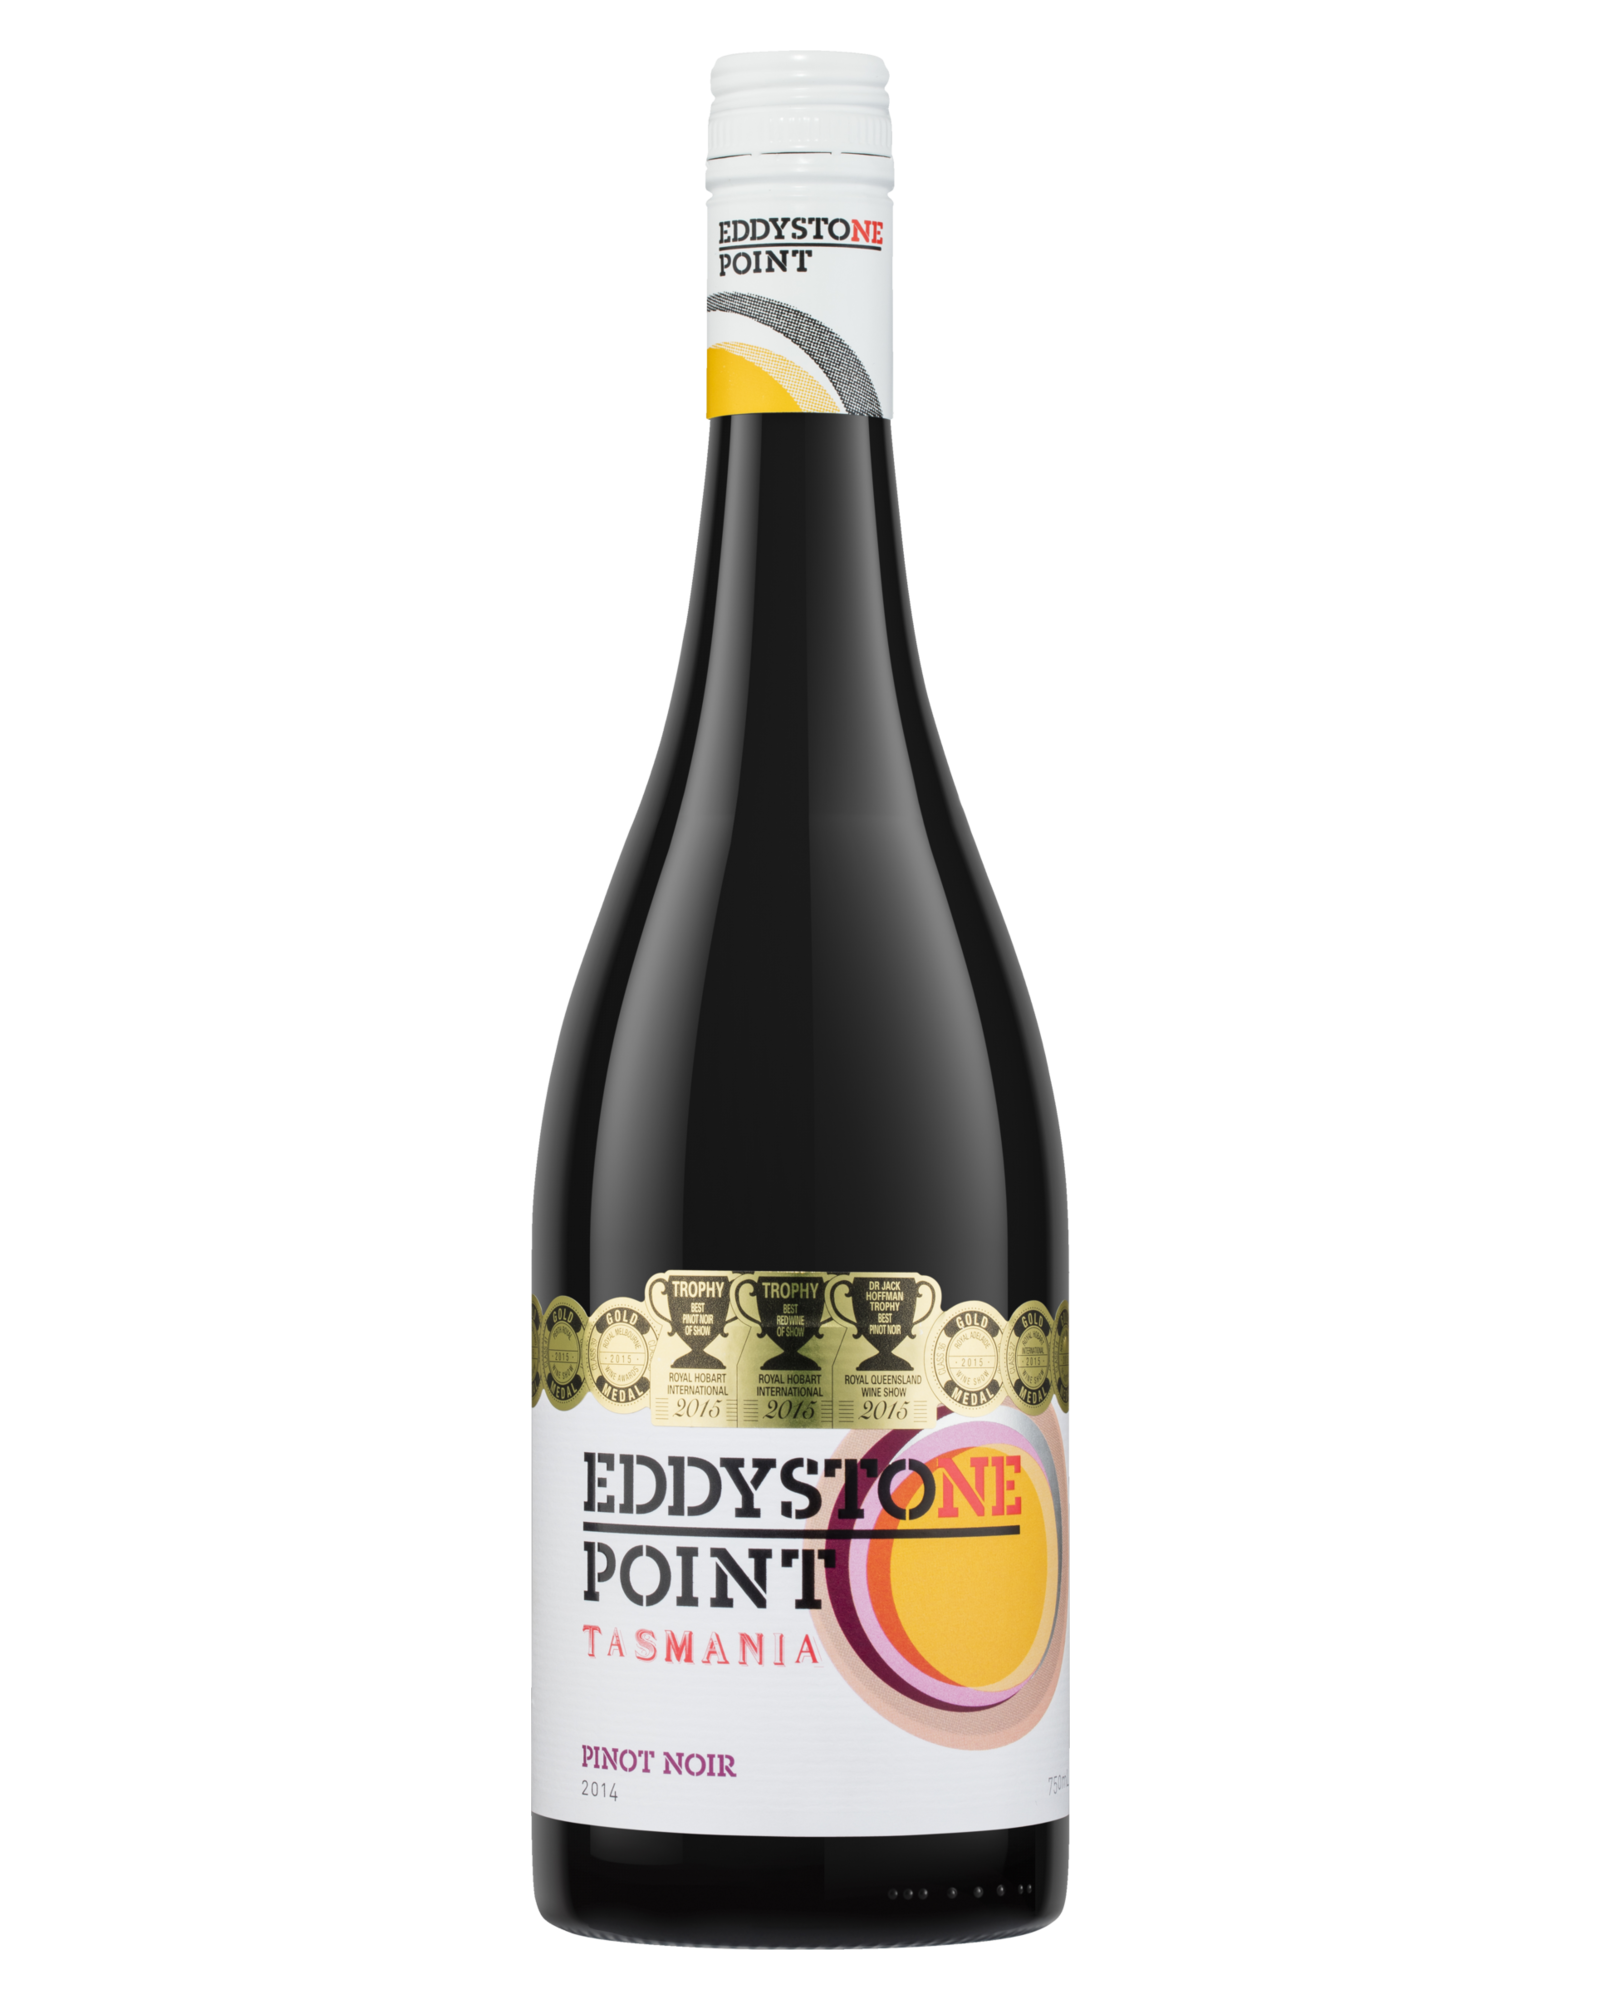 Eddystone Point Pinot Noir